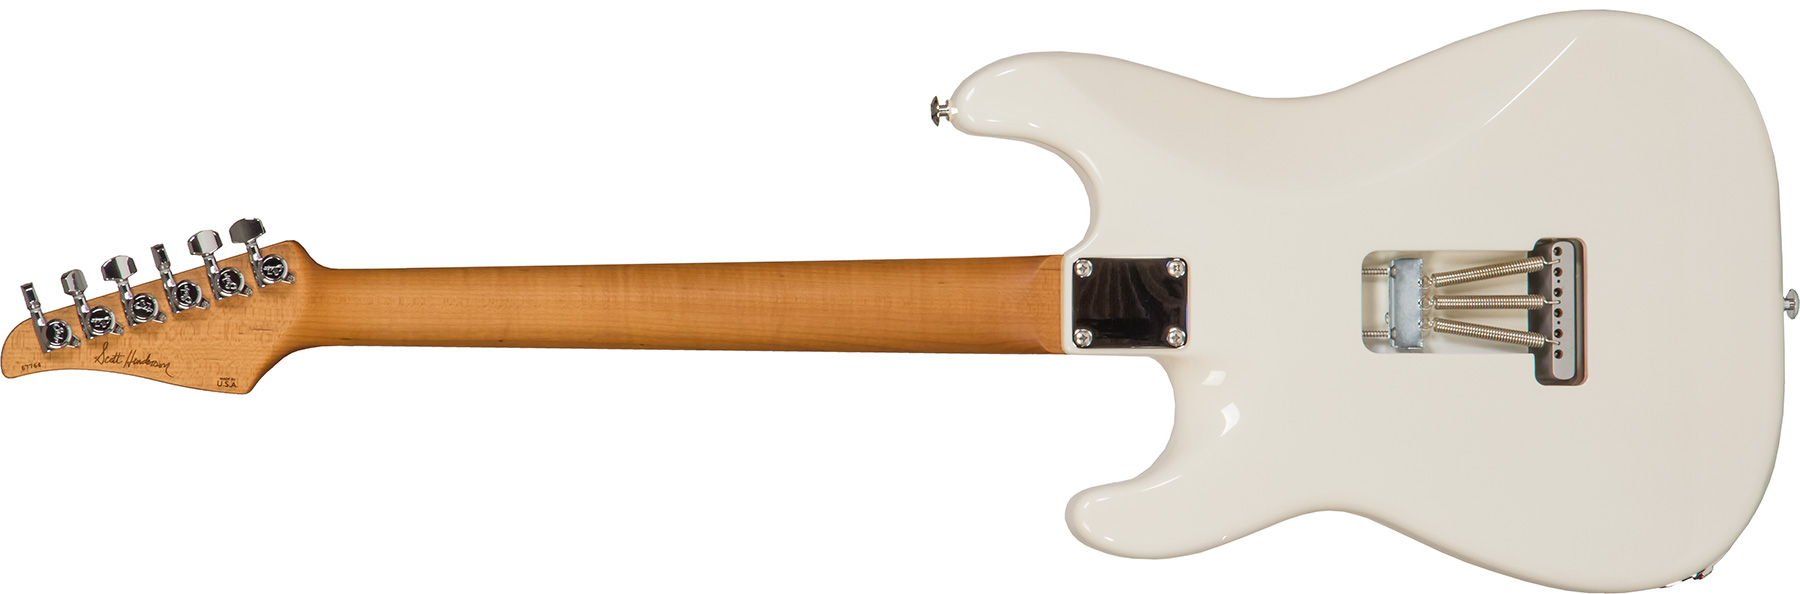 Suhr Scott Henderson Classic S 01-sig-0009 Signature 3s Trem Rw #67764 - Olympic White - E-Gitarre in Str-Form - Variation 1